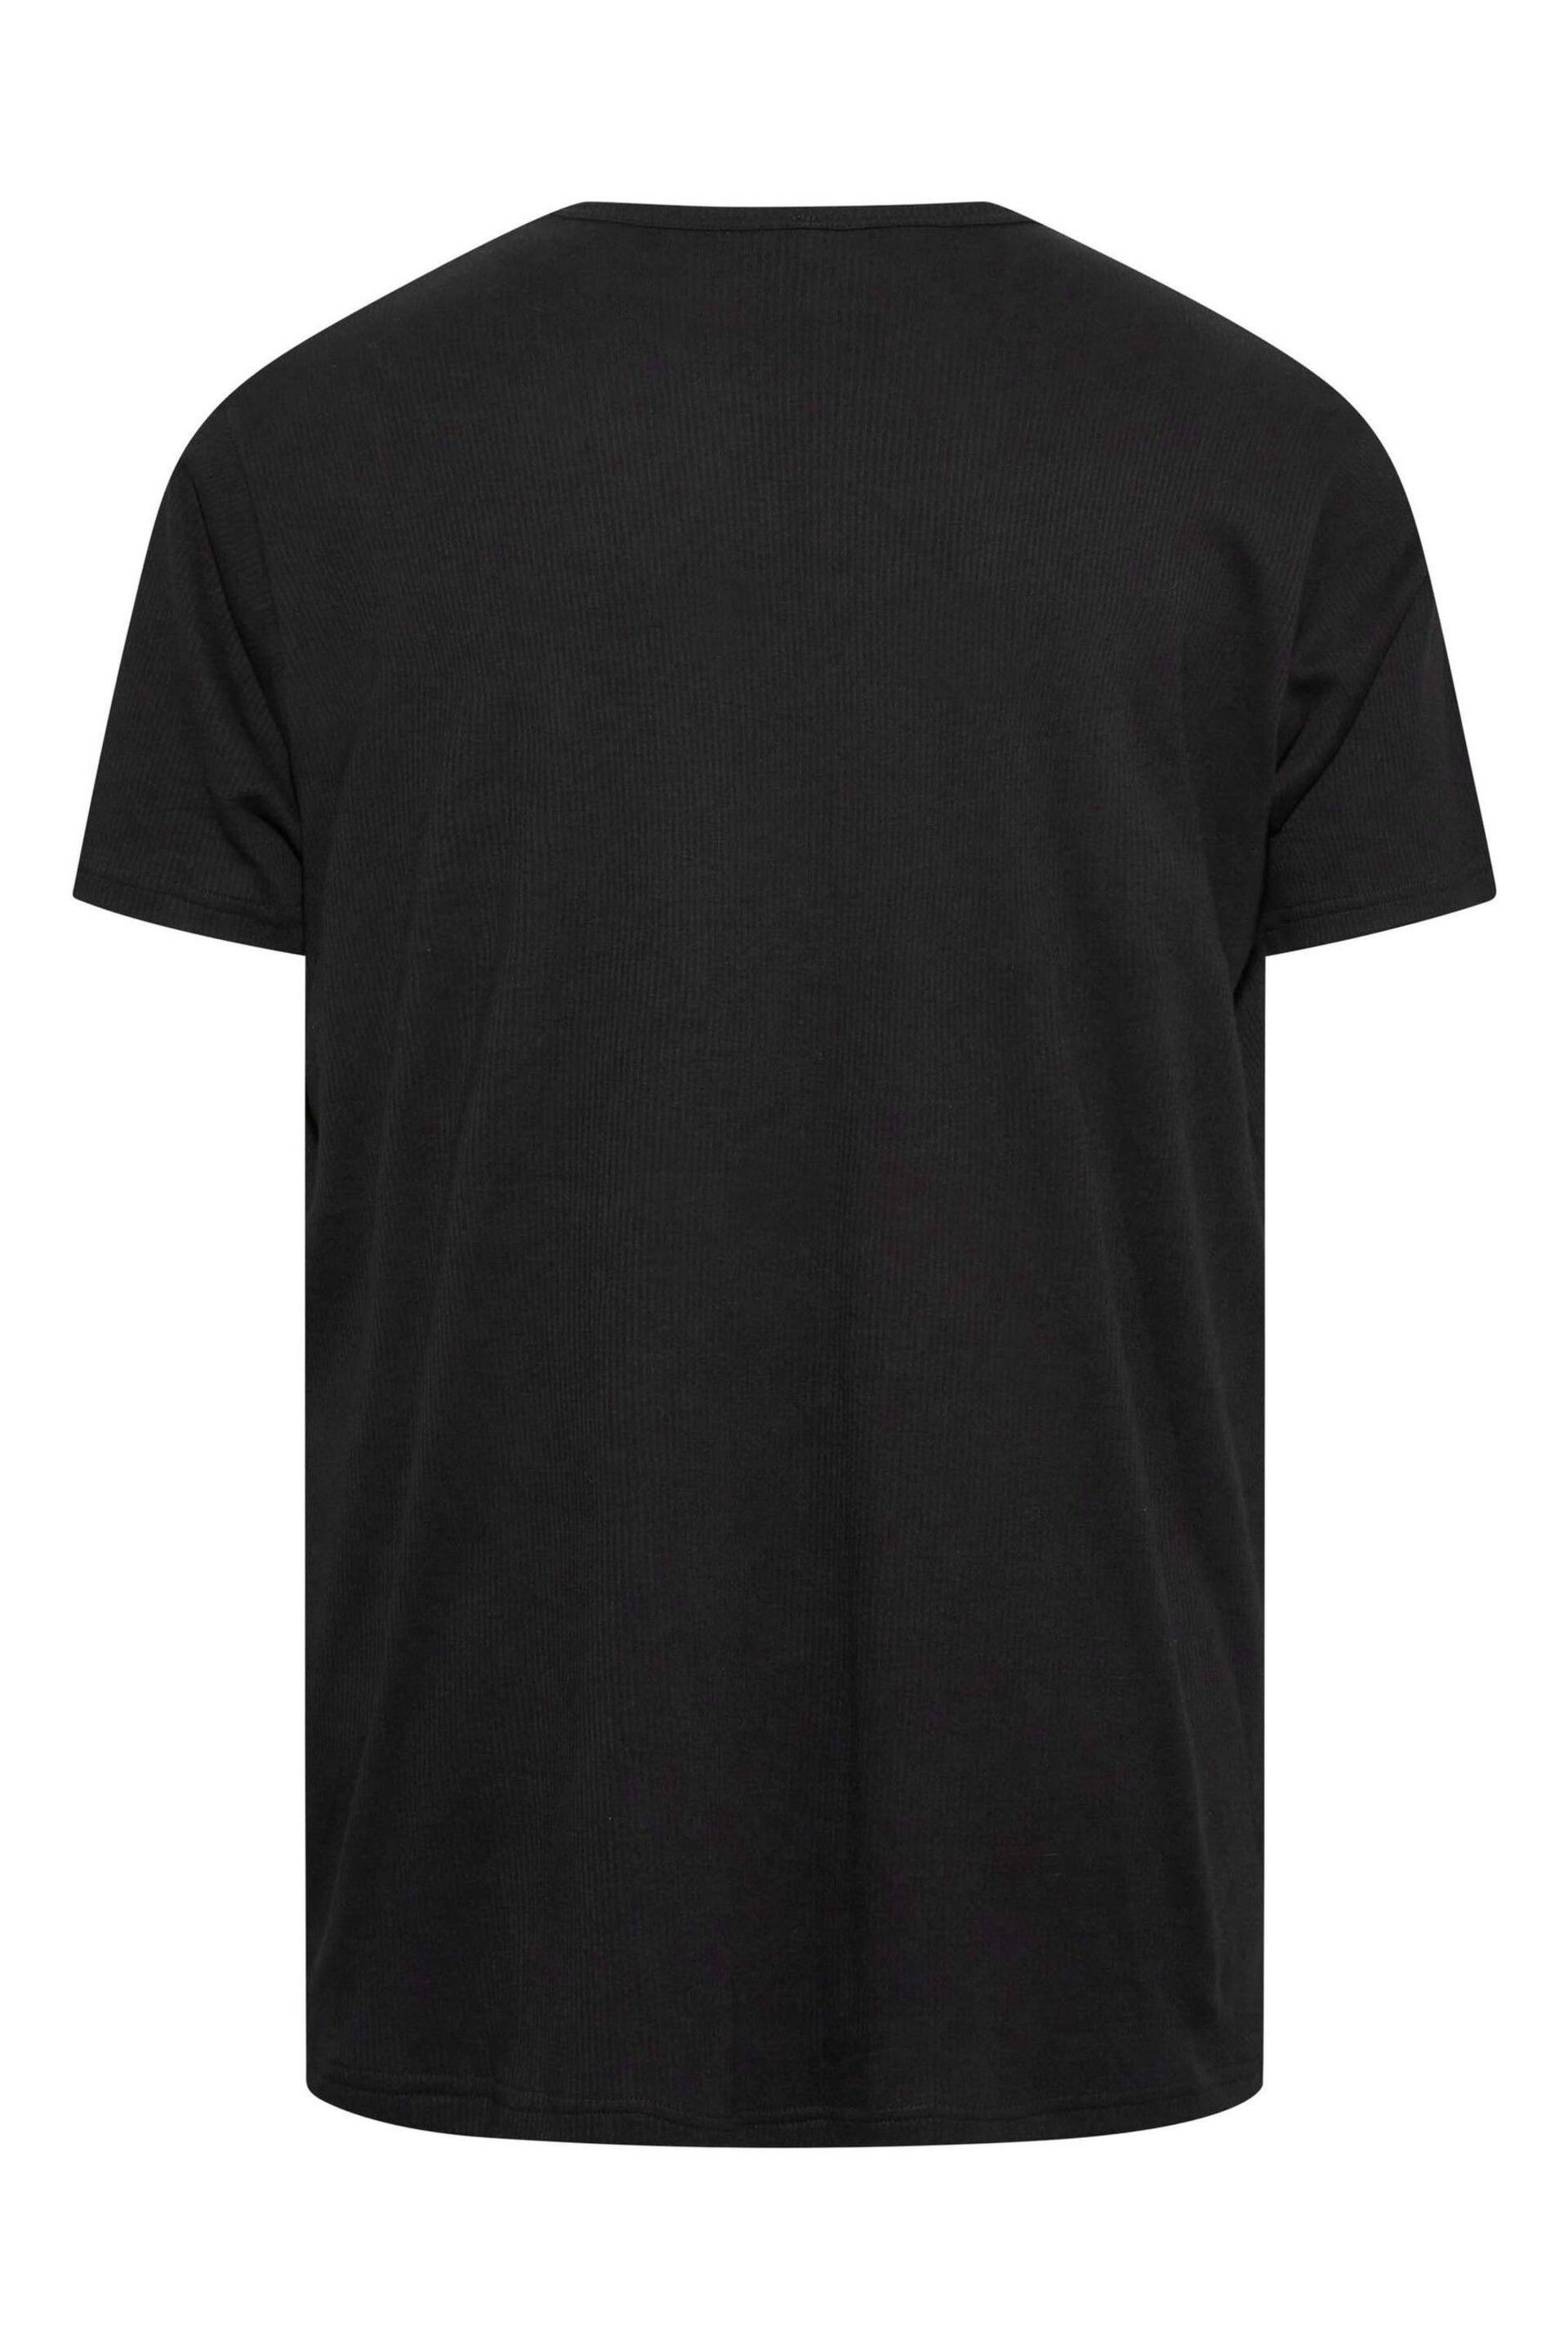 BadRhino Big & Tall Black 2 Pack Thermal T-Shirts - Image 4 of 4